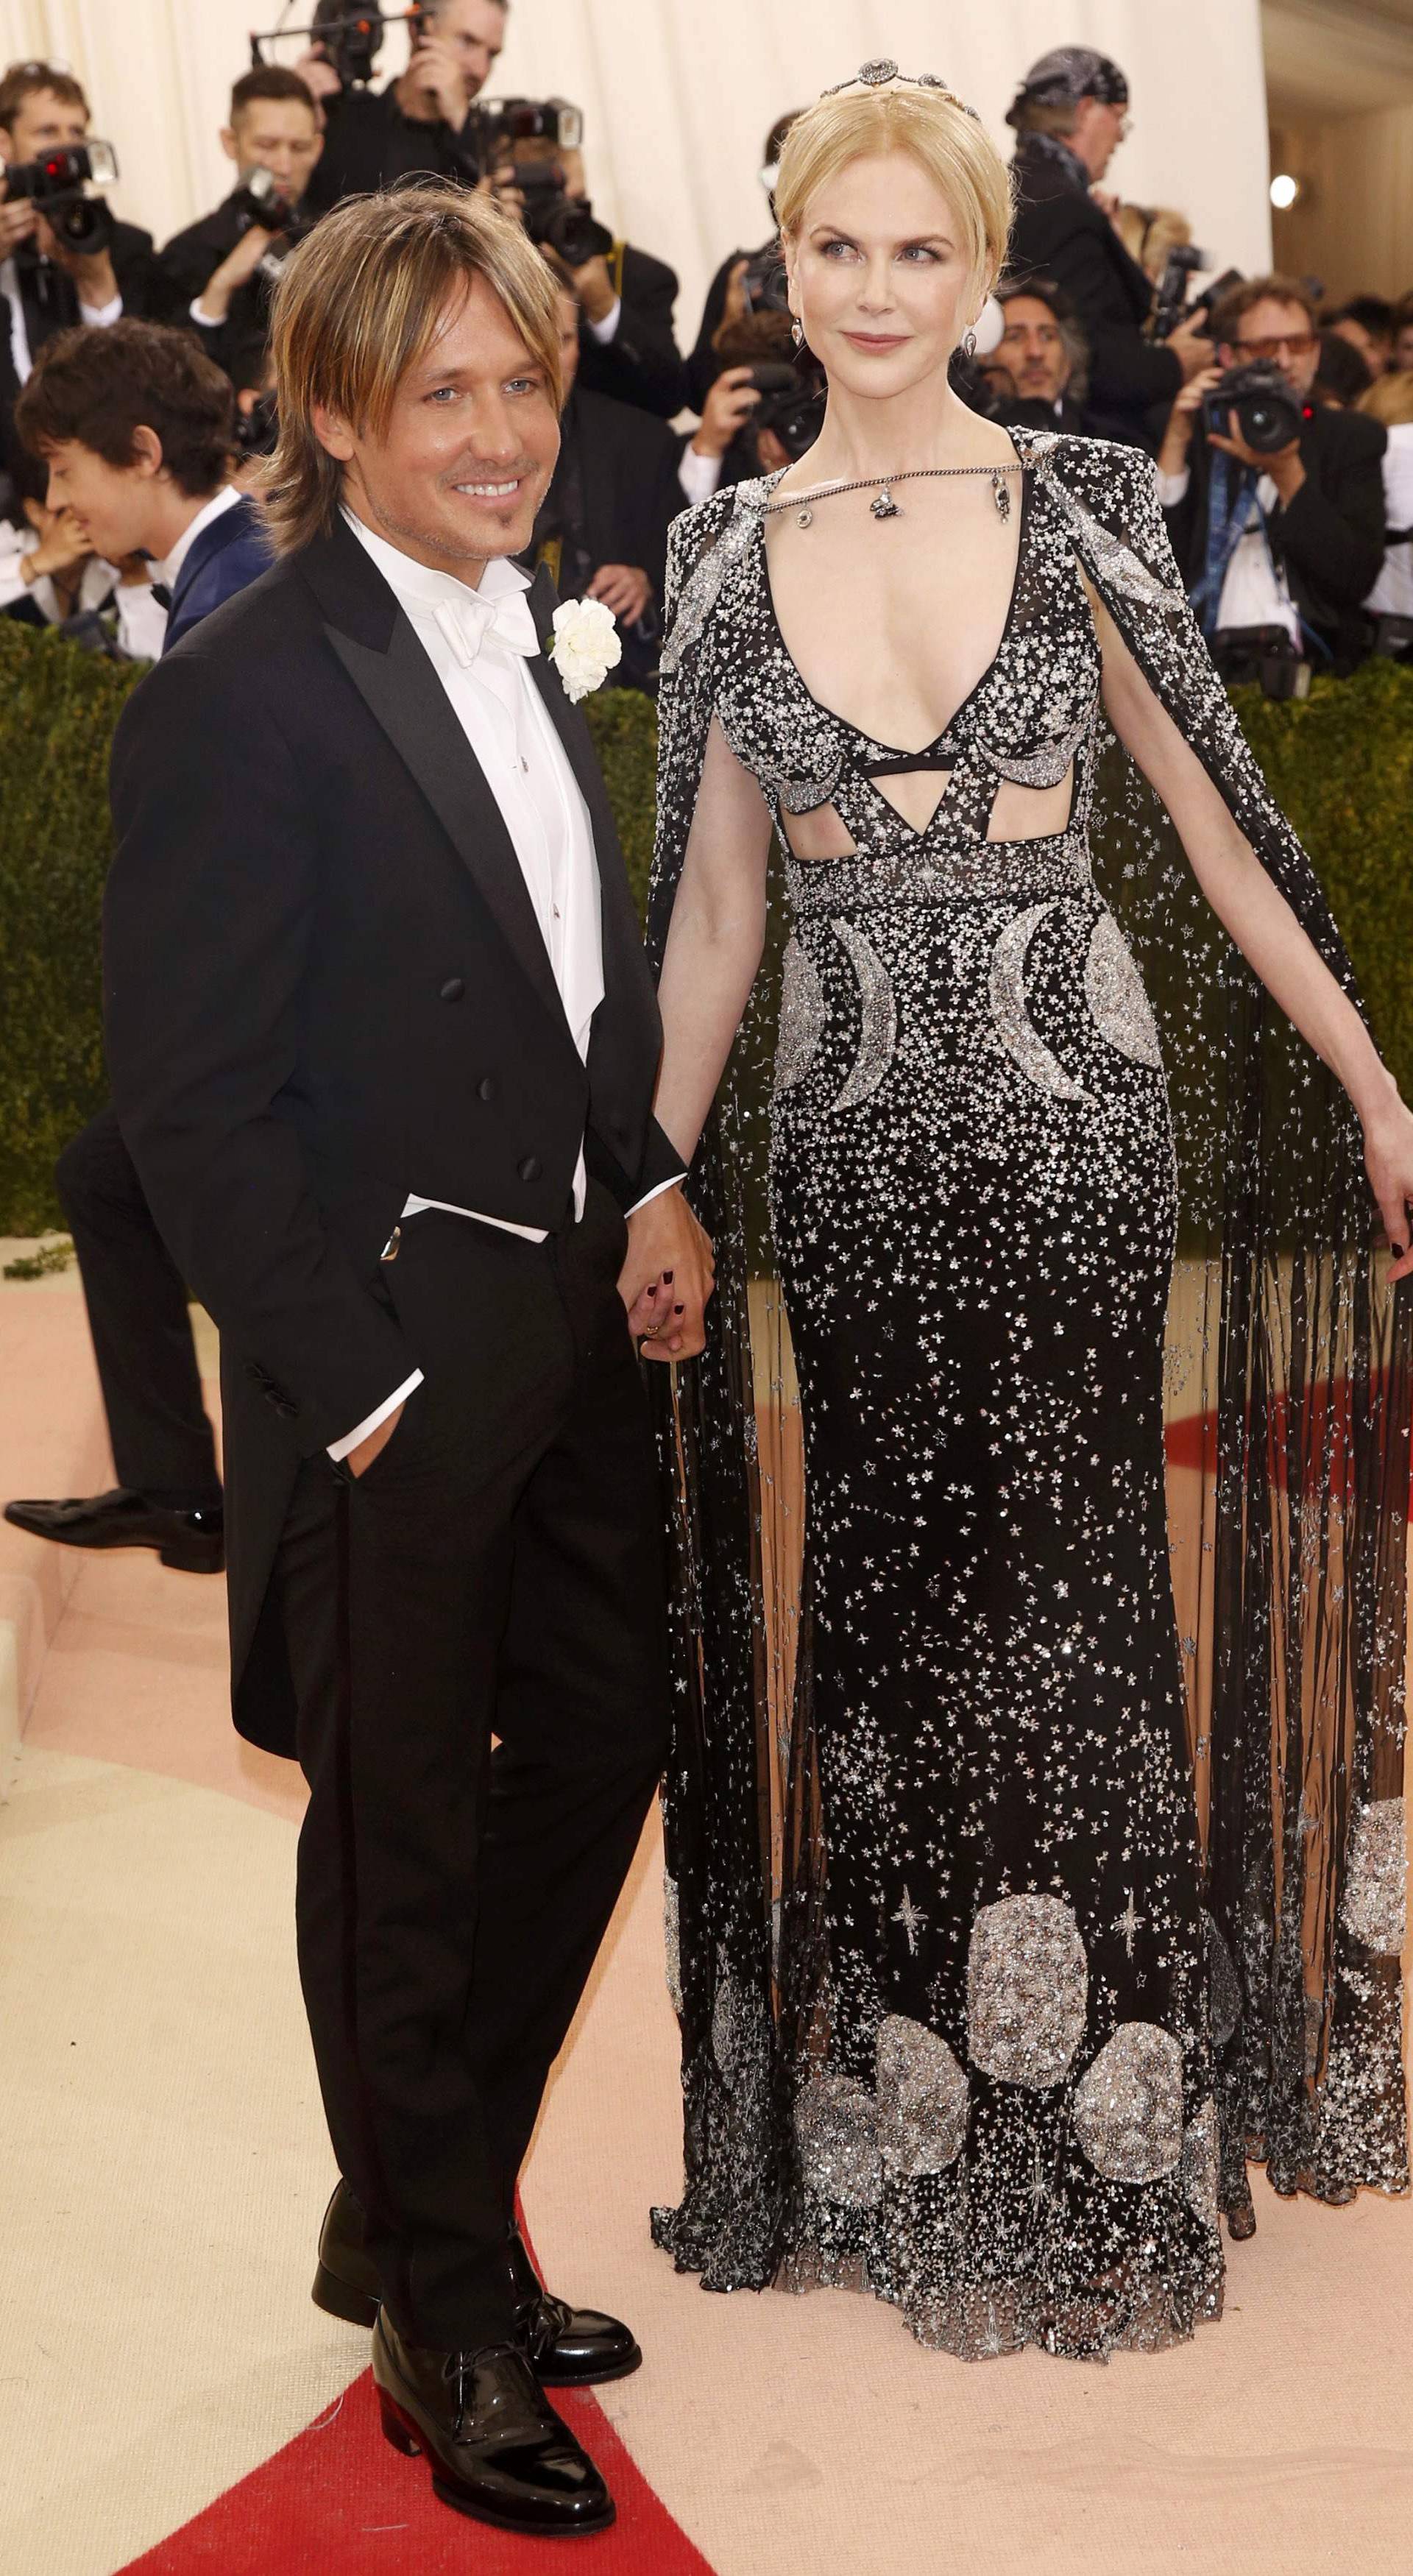 Actress Nicole Kidman and husband Keith Urban arrive at the Met Gala in New York